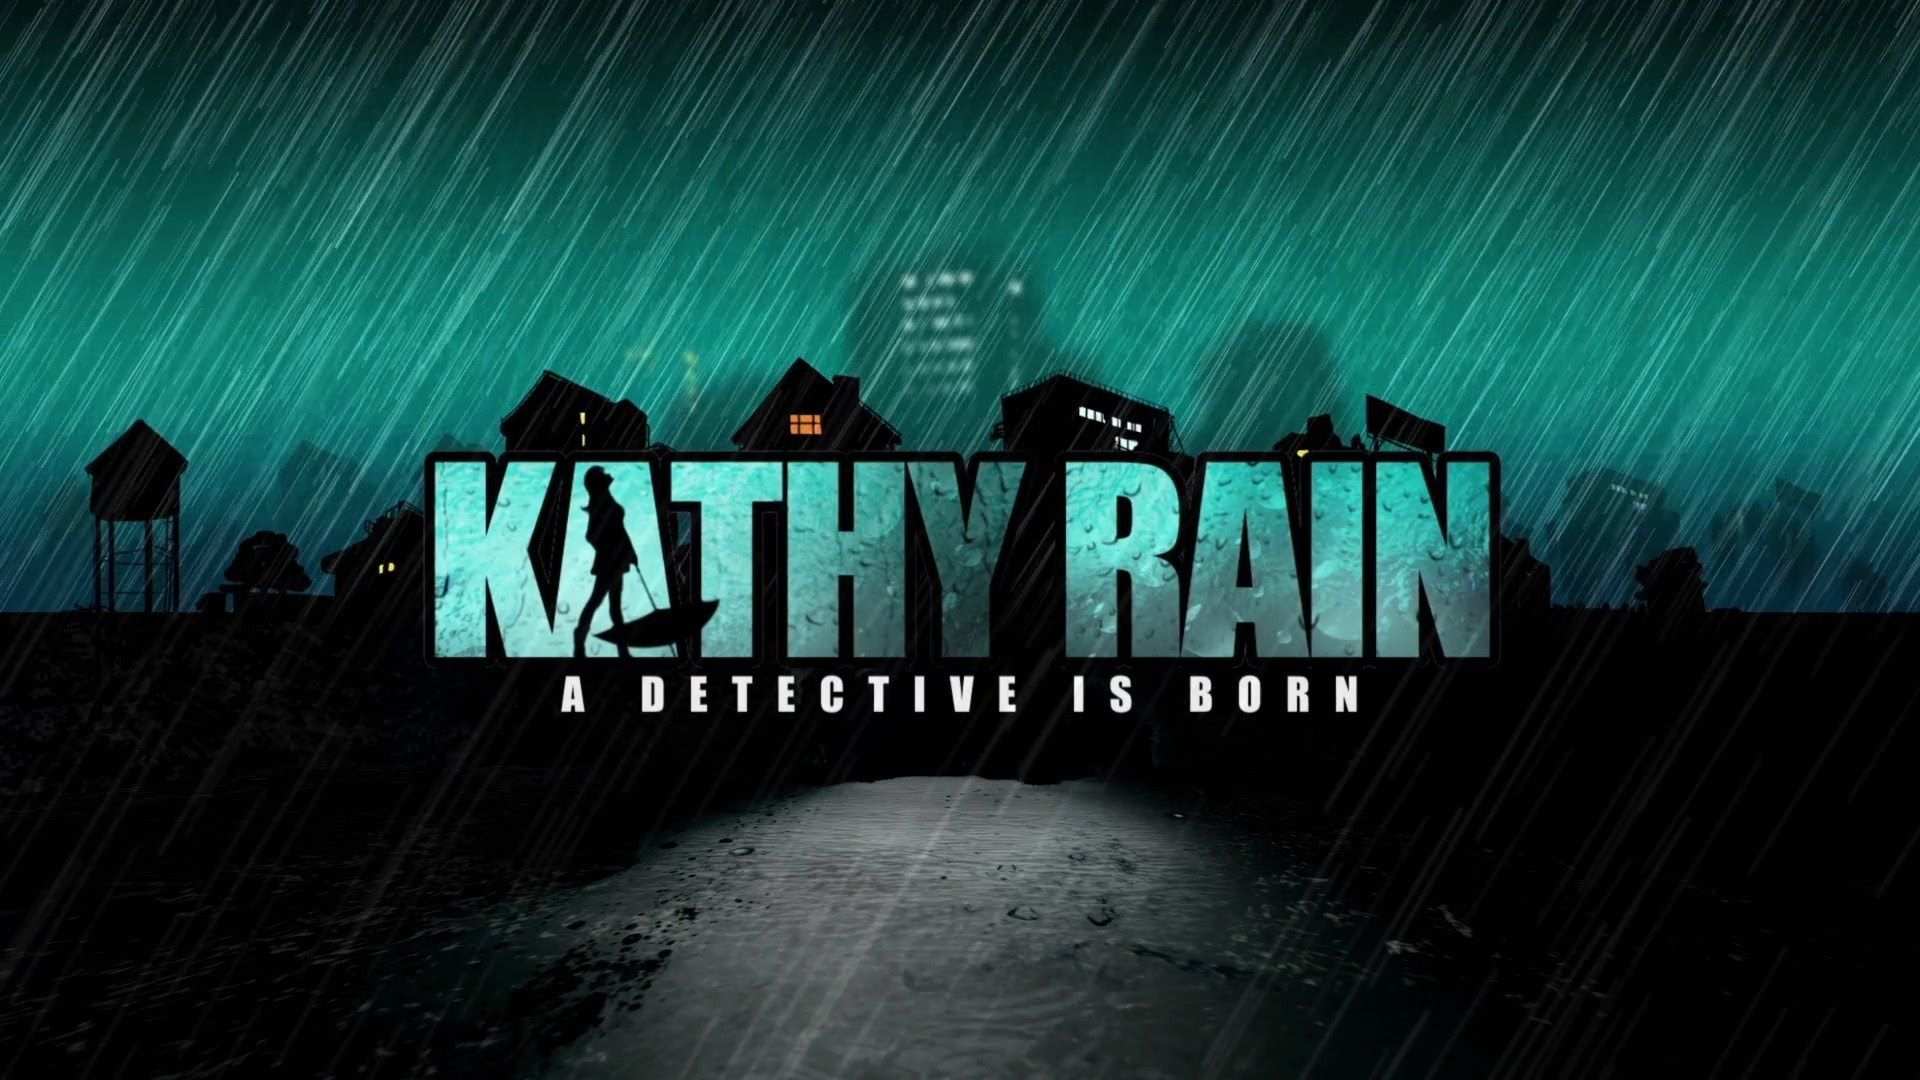 Kathy Rain Logo